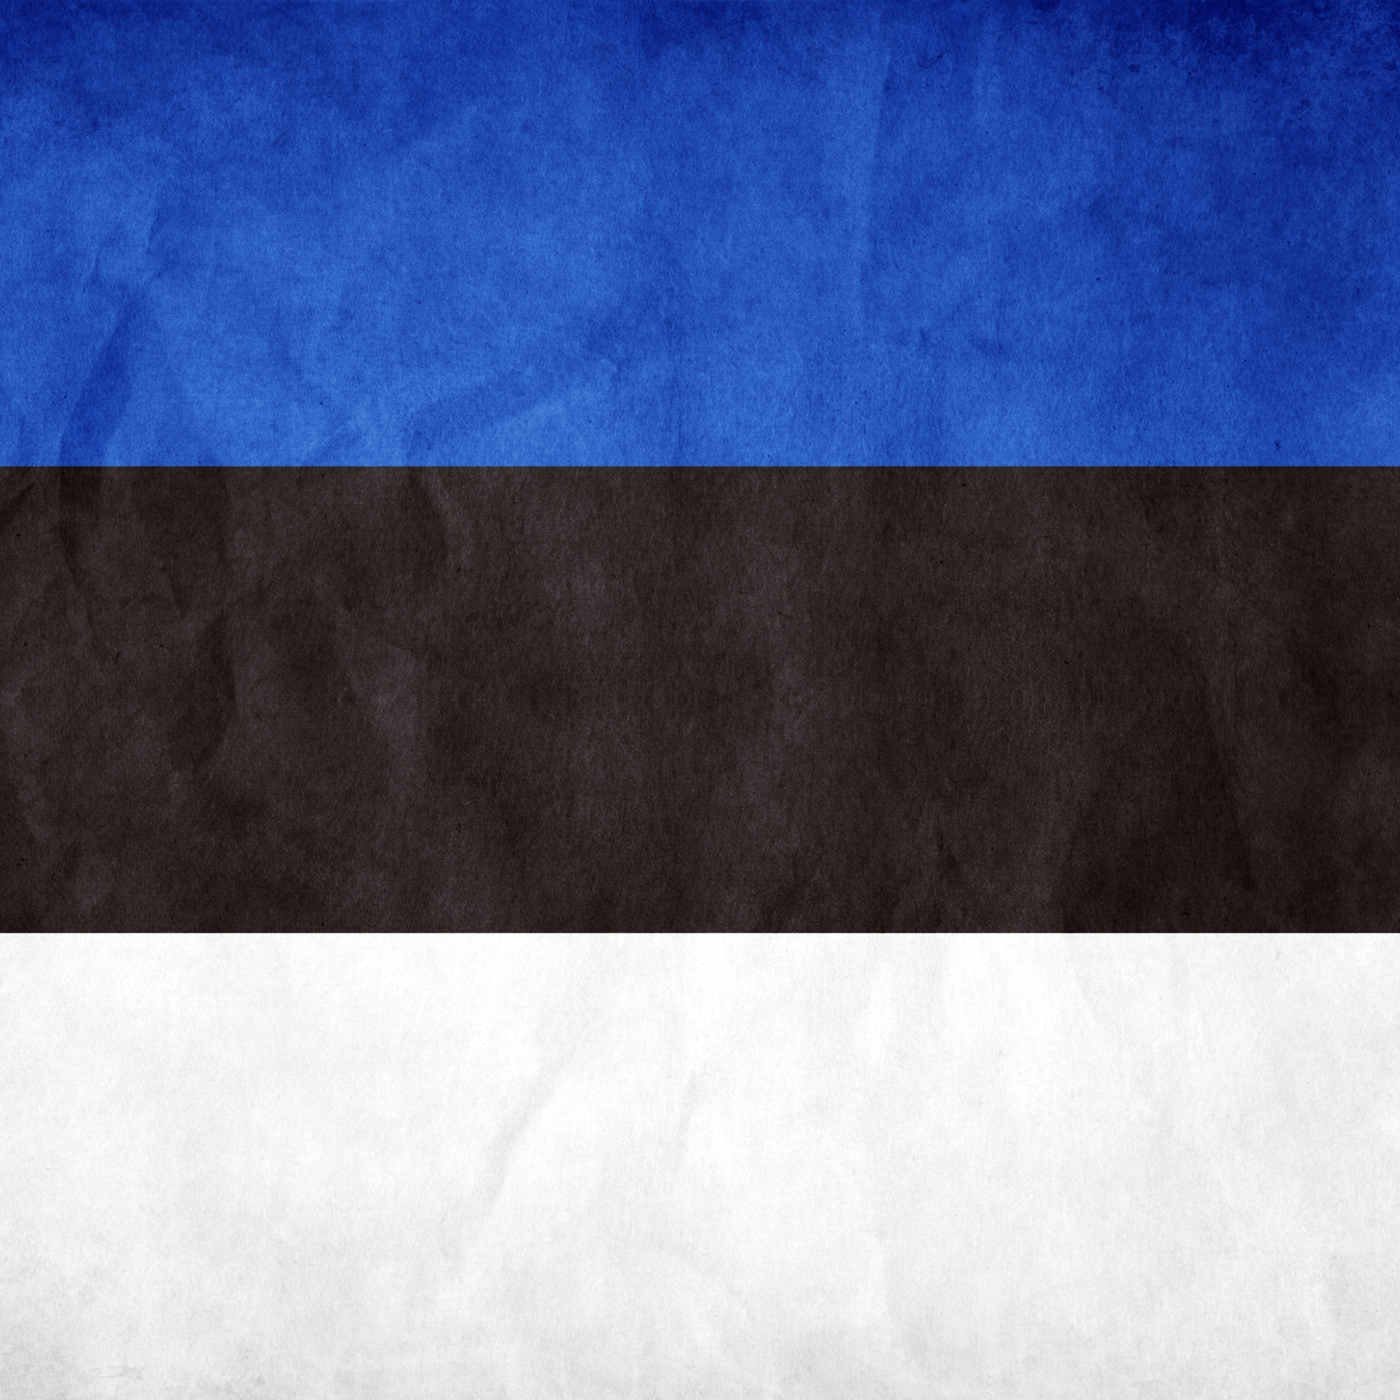 флаг эстонии